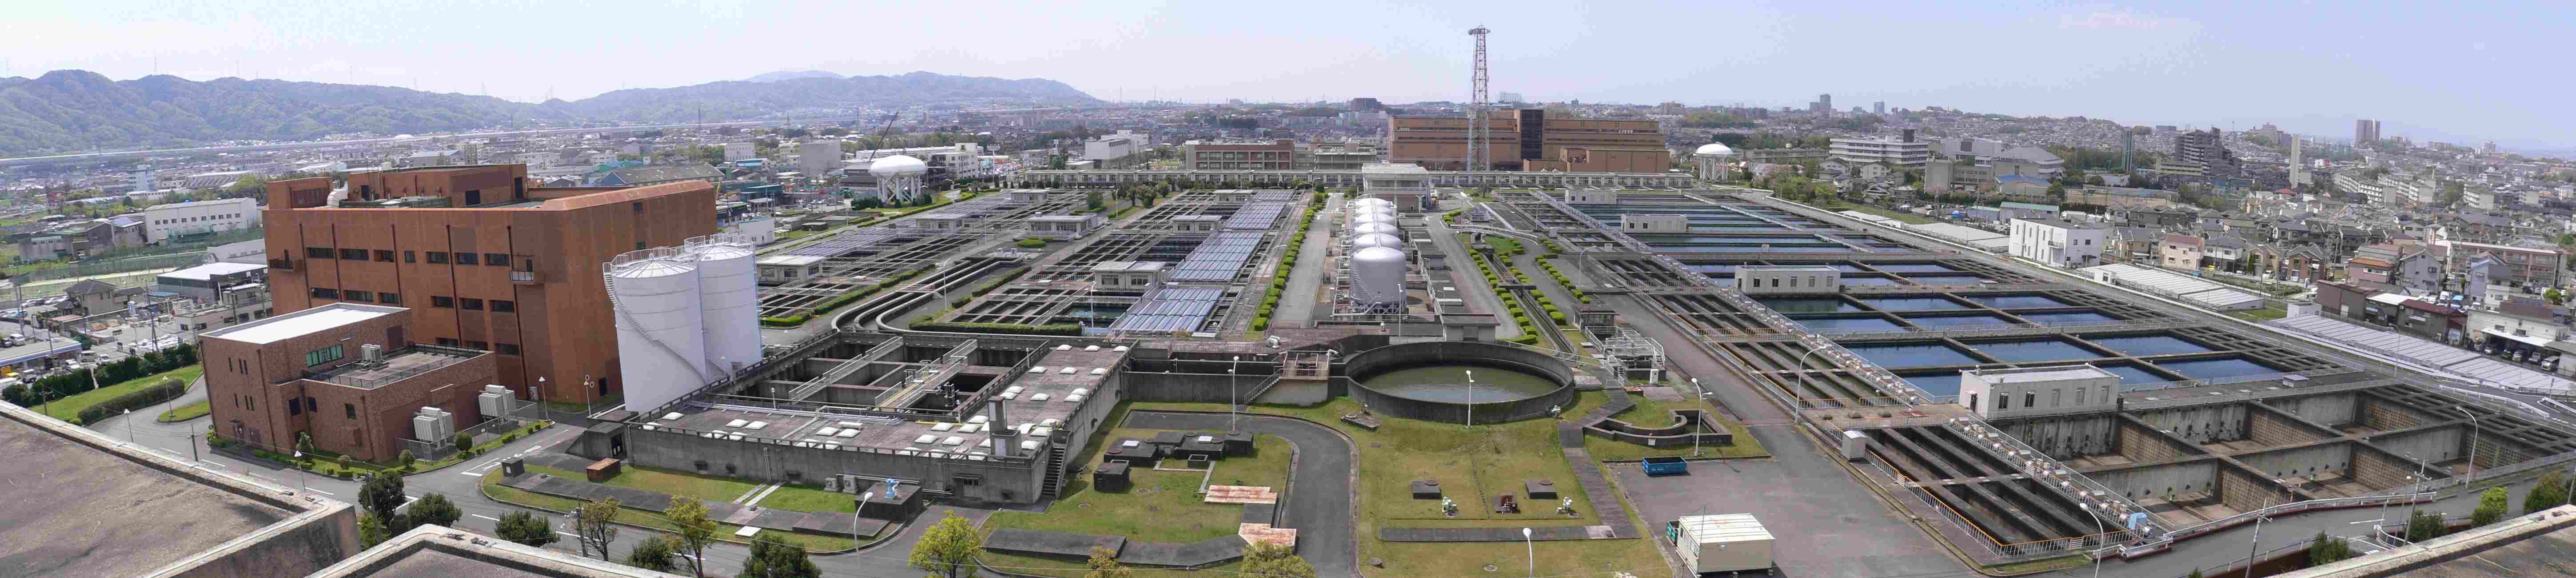 Images Wikimedia Commons/‎8 yuachi‎ Murano_Water_Treatment_Plant2.jpg